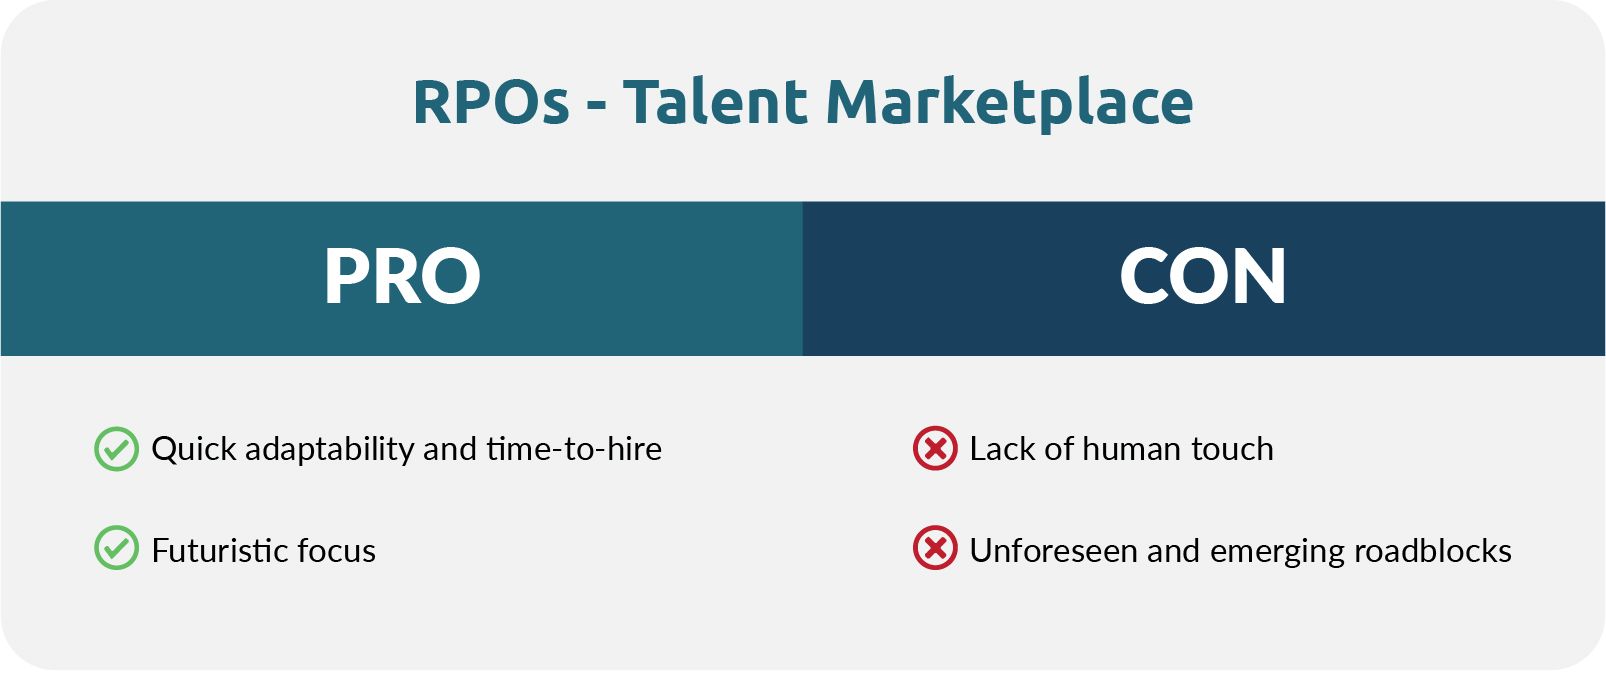 ProCon_RPOs - Talent Marketplace